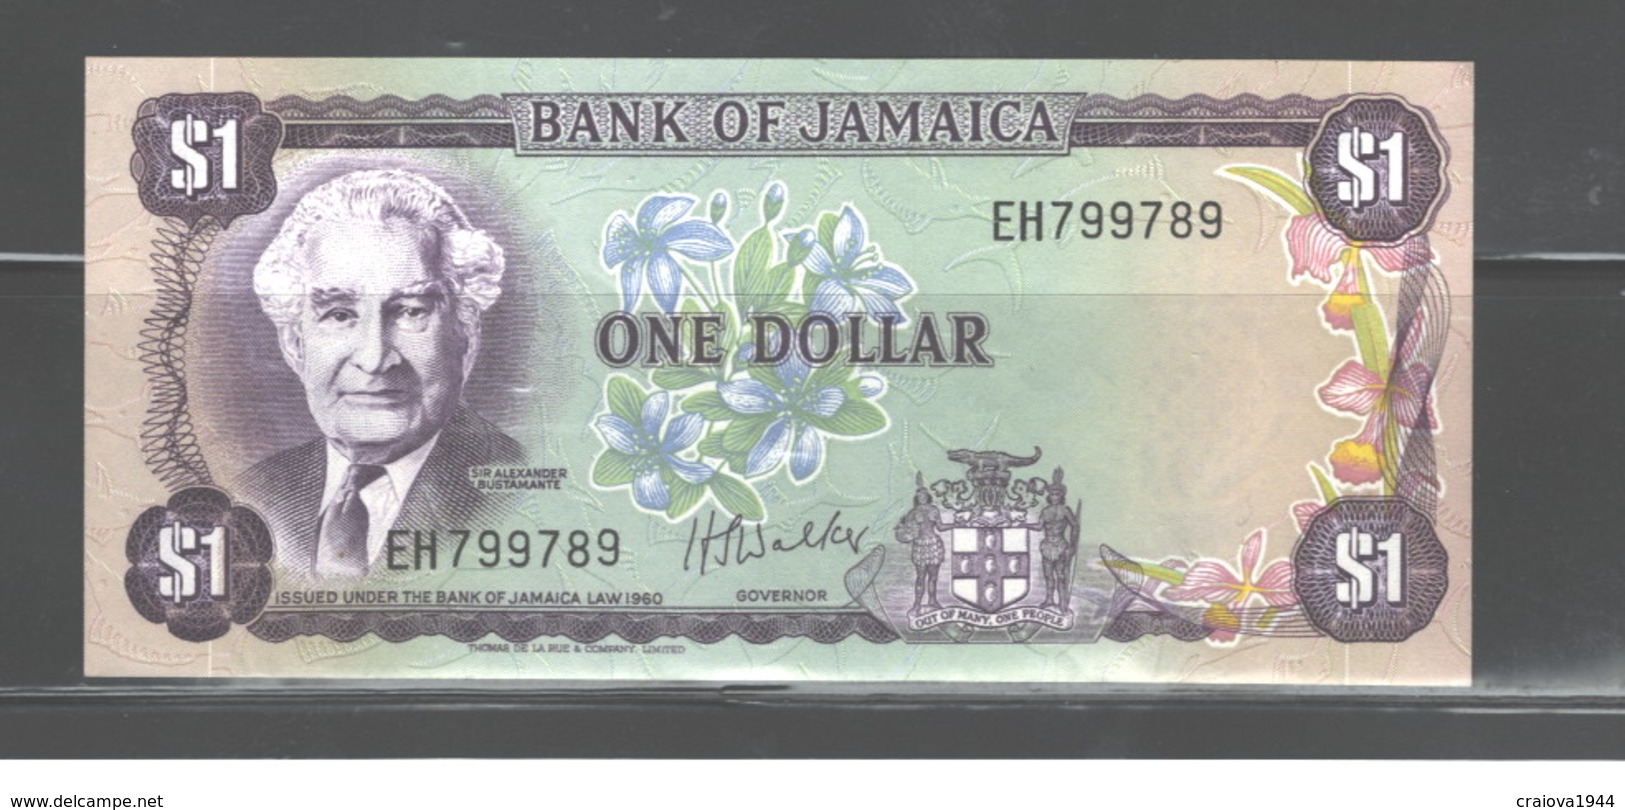 JAMAICA $1 1960, (IN MY OPINION), UNC - Jamaica